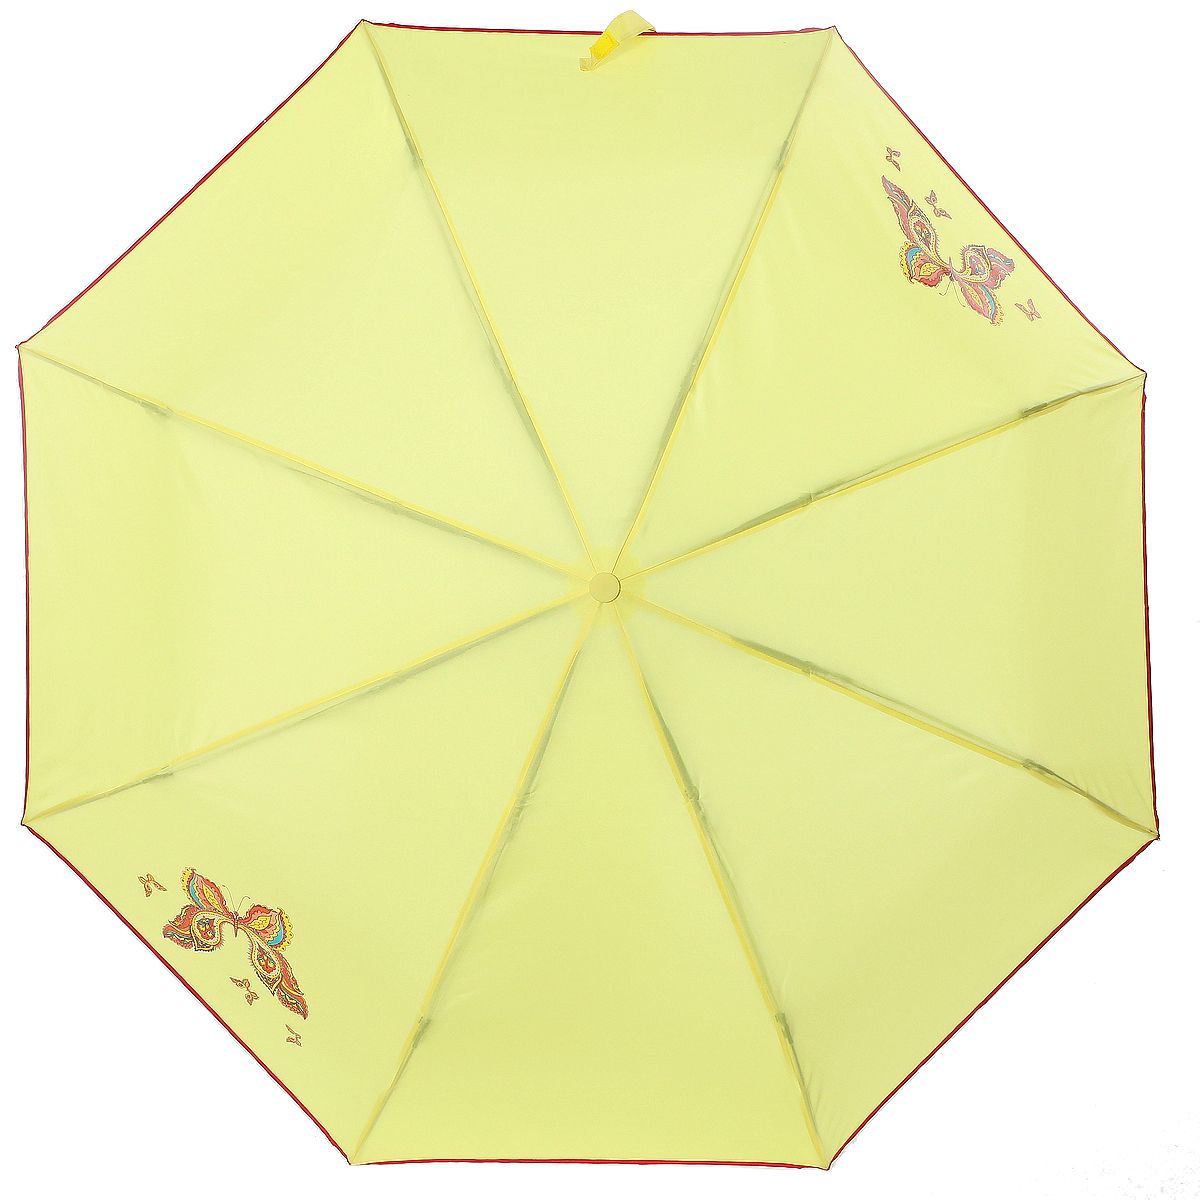  Zhangpu Xuzherg Umbrella Co LTD .3511-1714